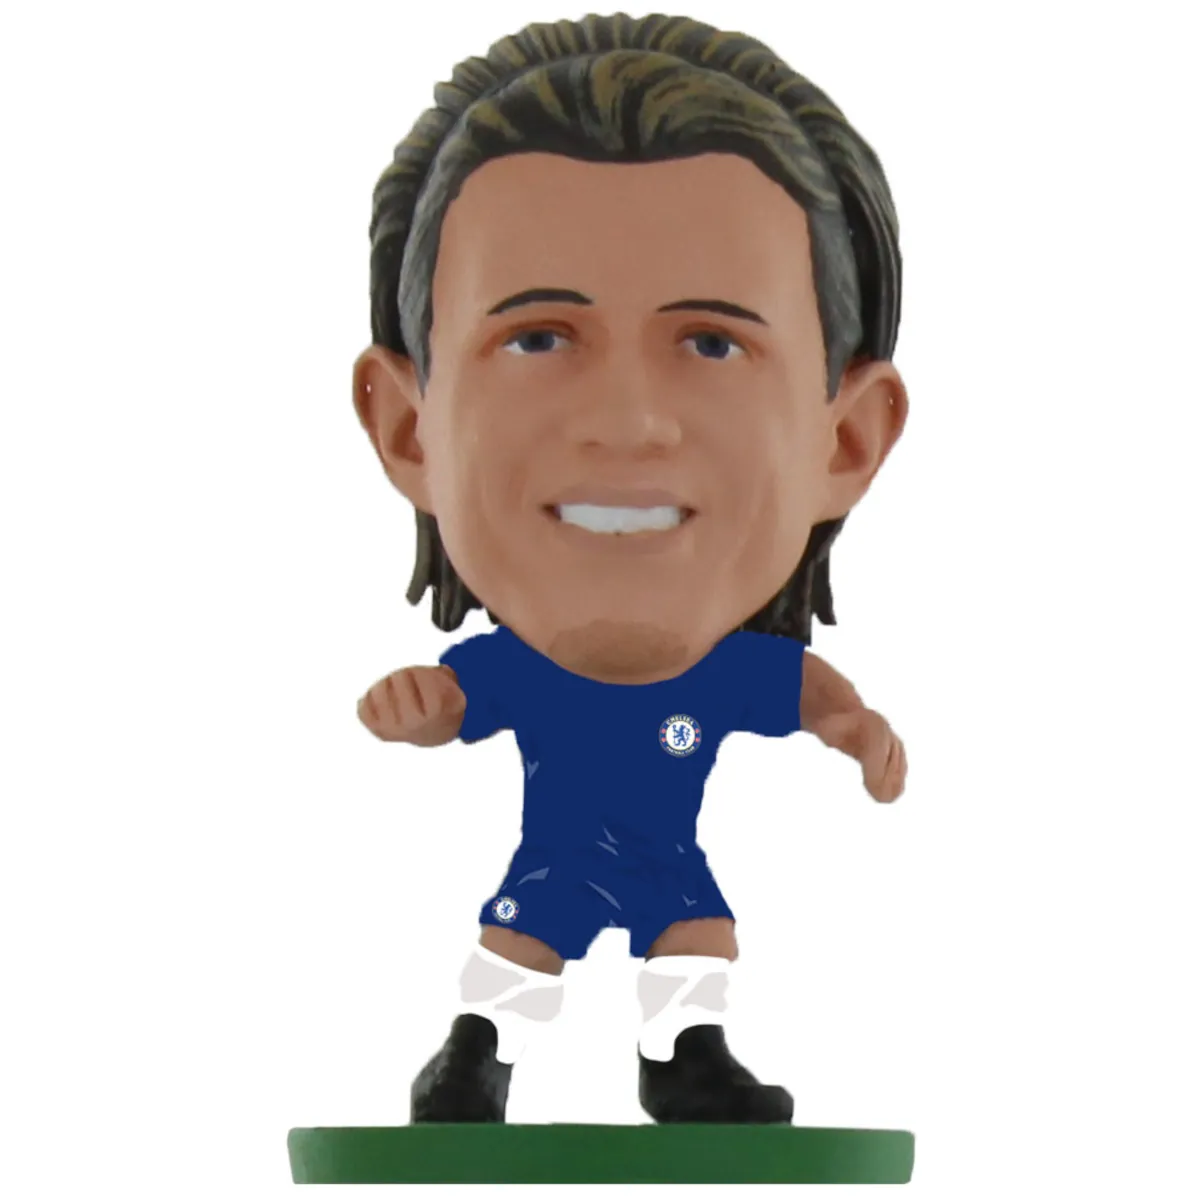 TM-01319 Chelsea FC SoccerStarz Collectable Figure - Conor Gallagher